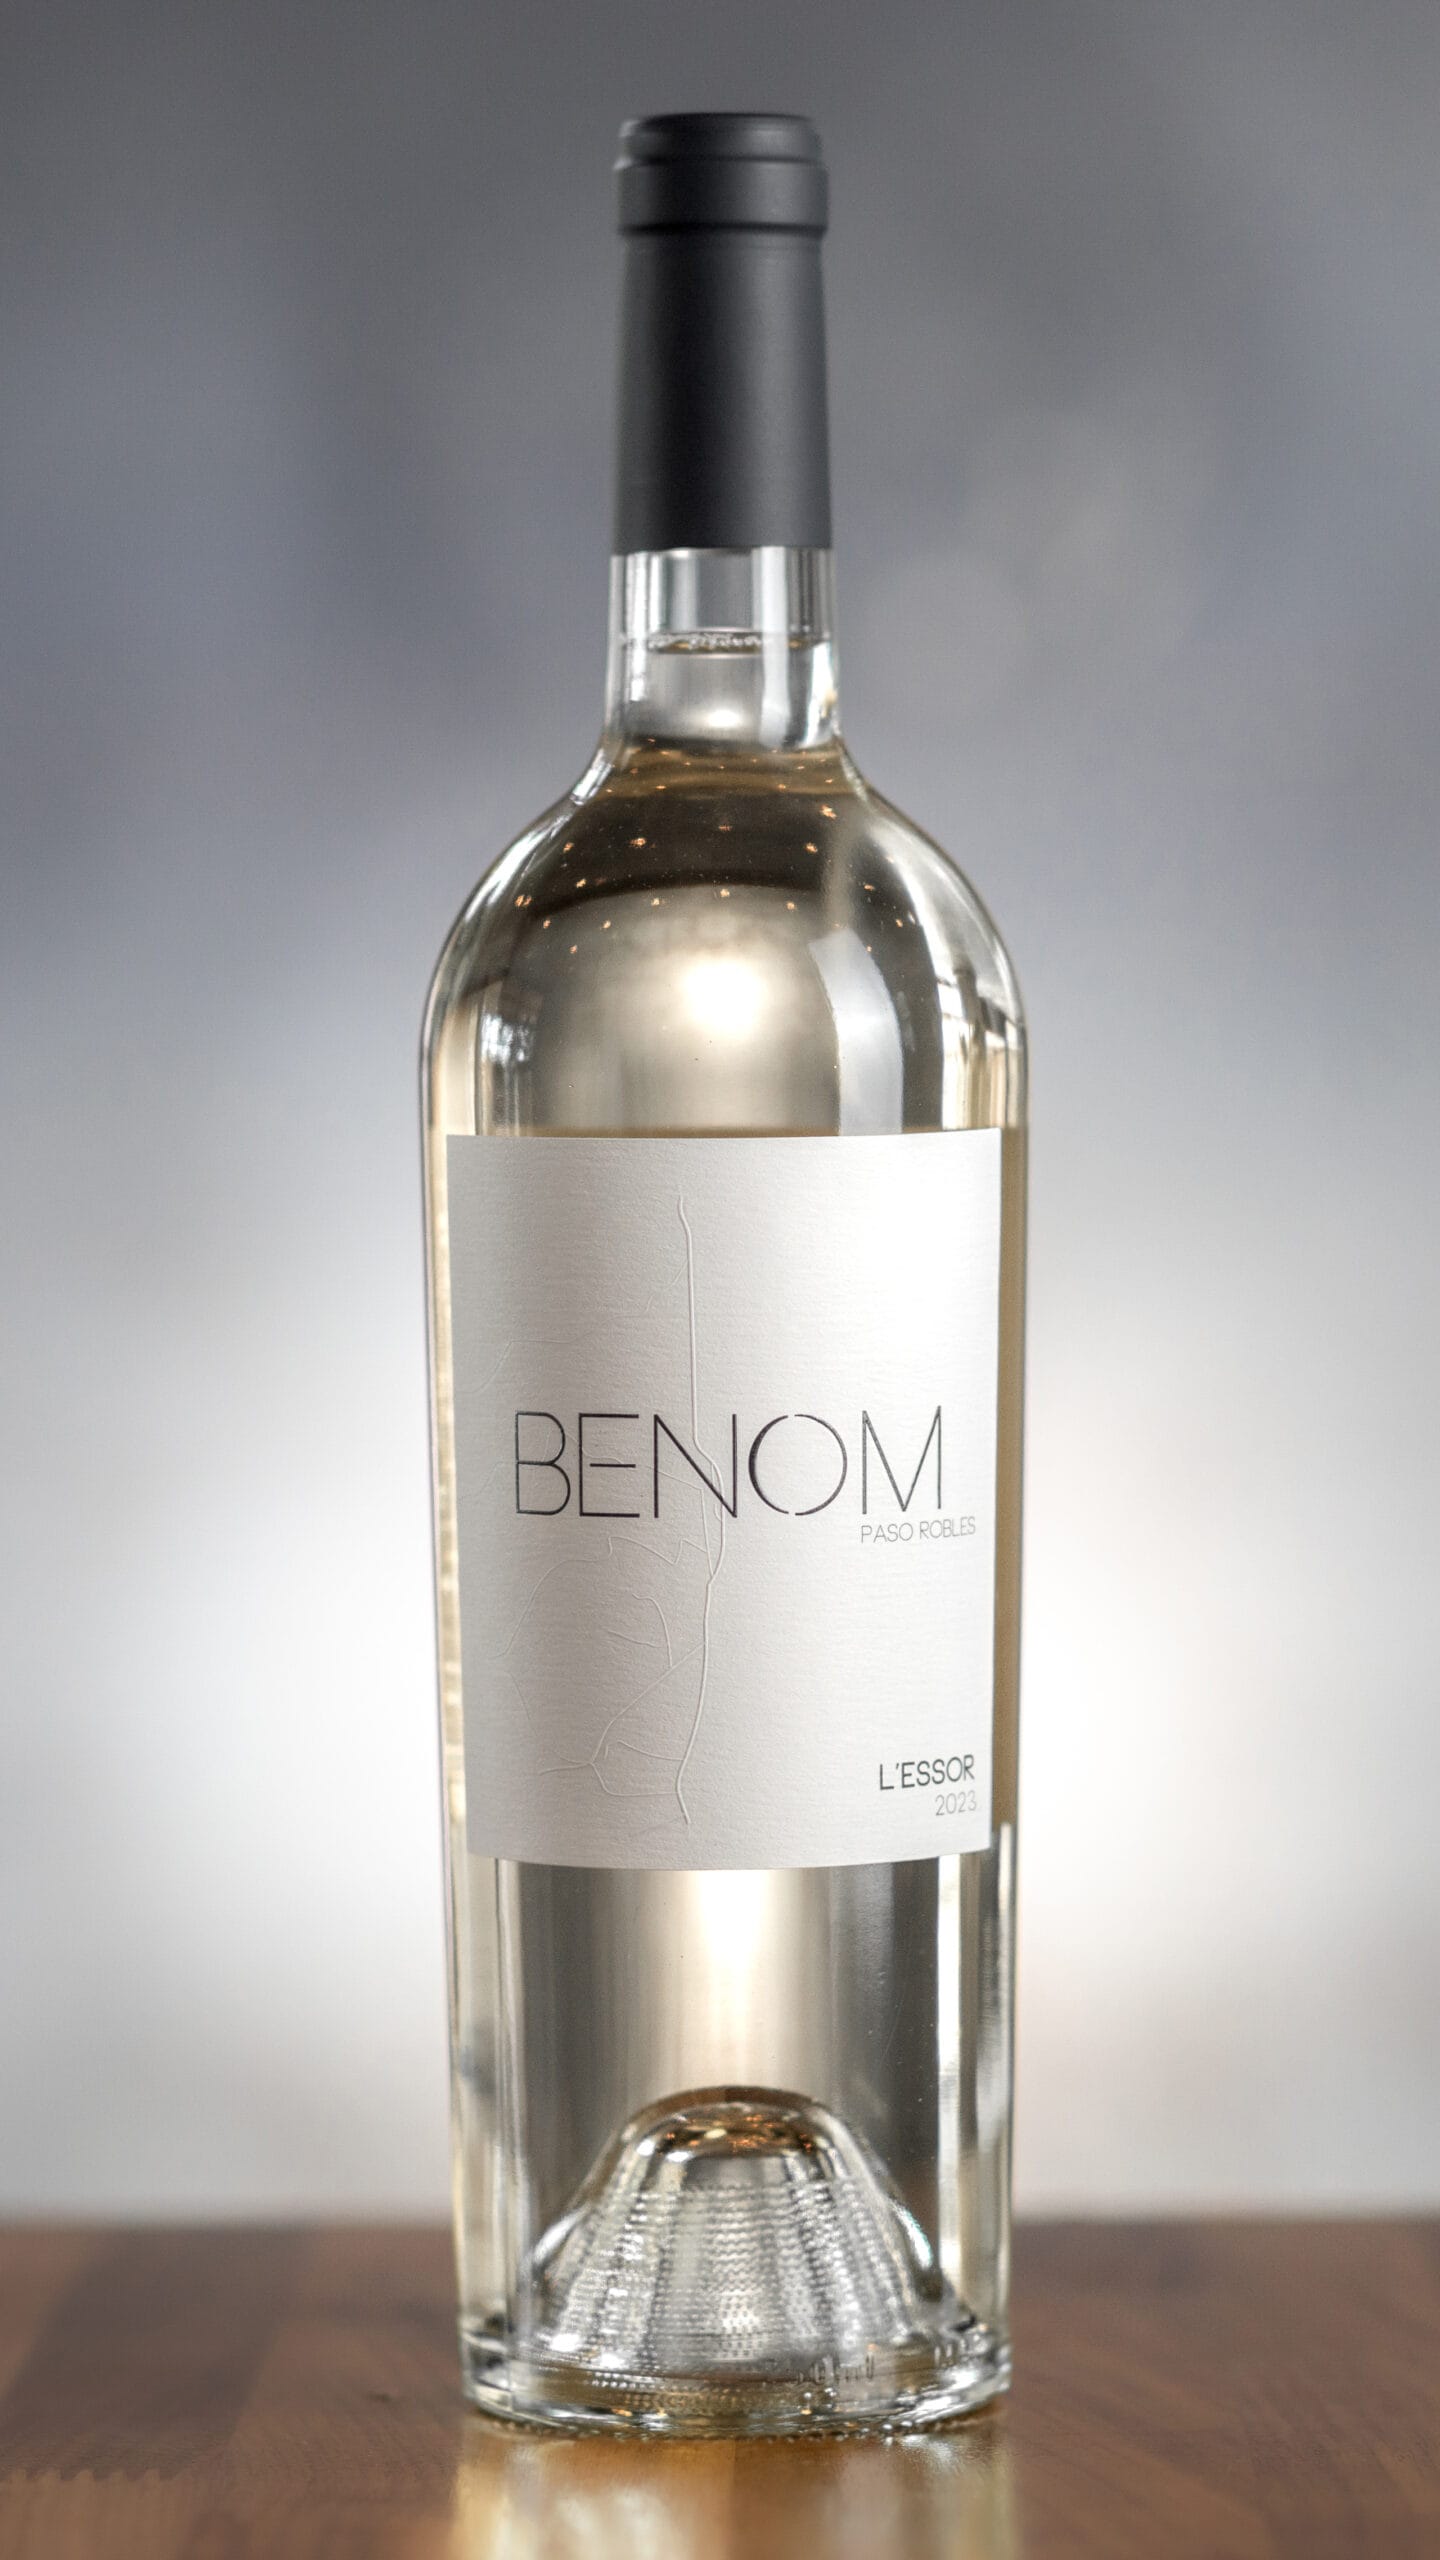 A Bottle of BENOM Wine Paso Robles, L'Essor Rosé